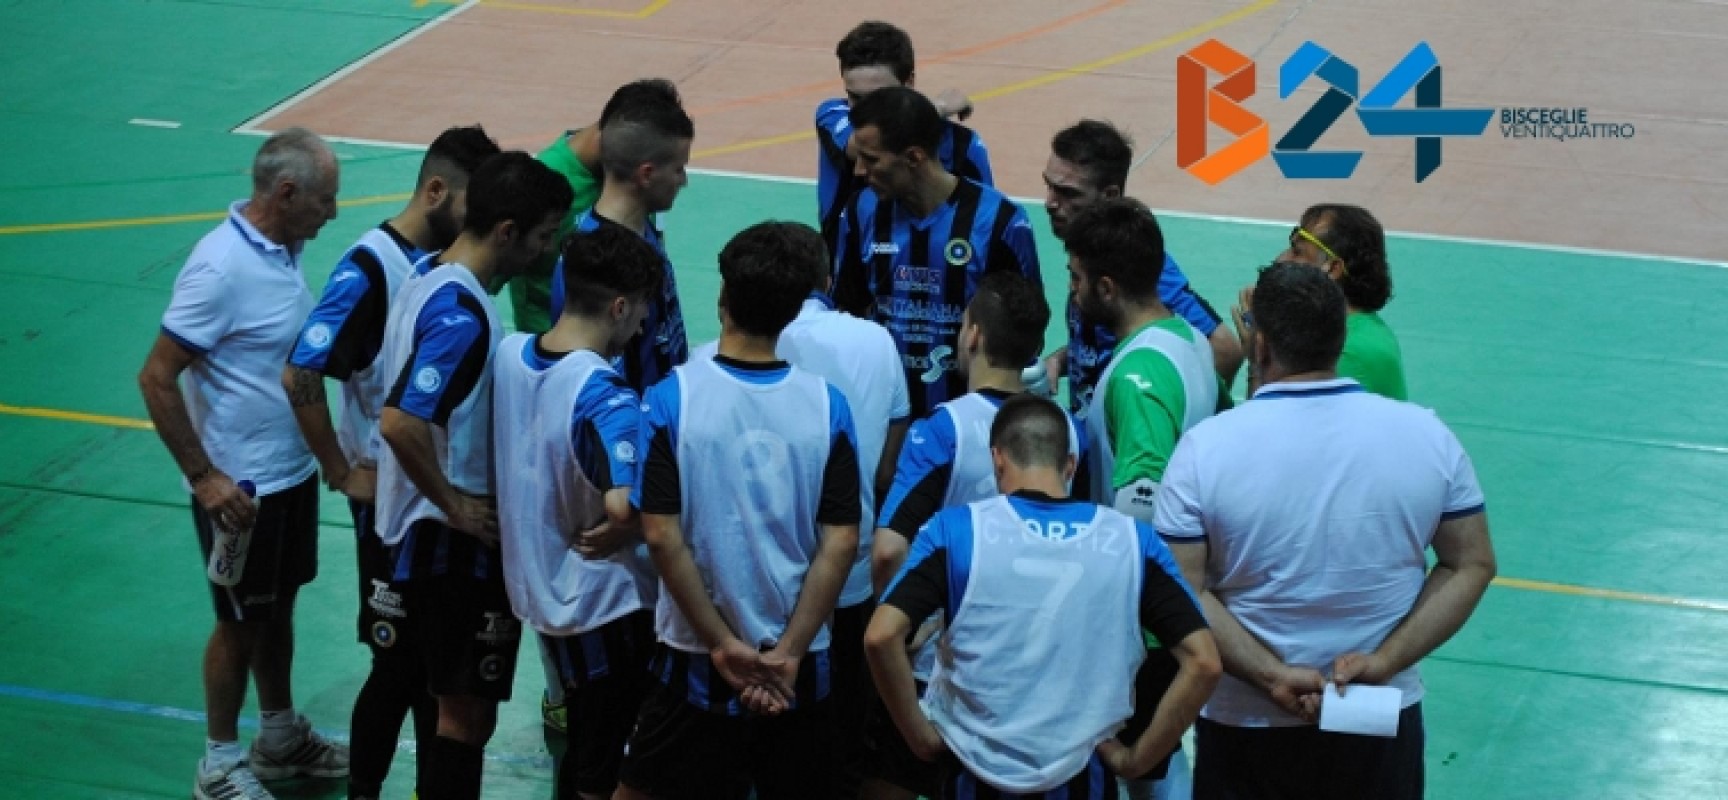 Diretta scritta: Futsal Bisceglie – Futsal Cisternino 3-1 FINALE